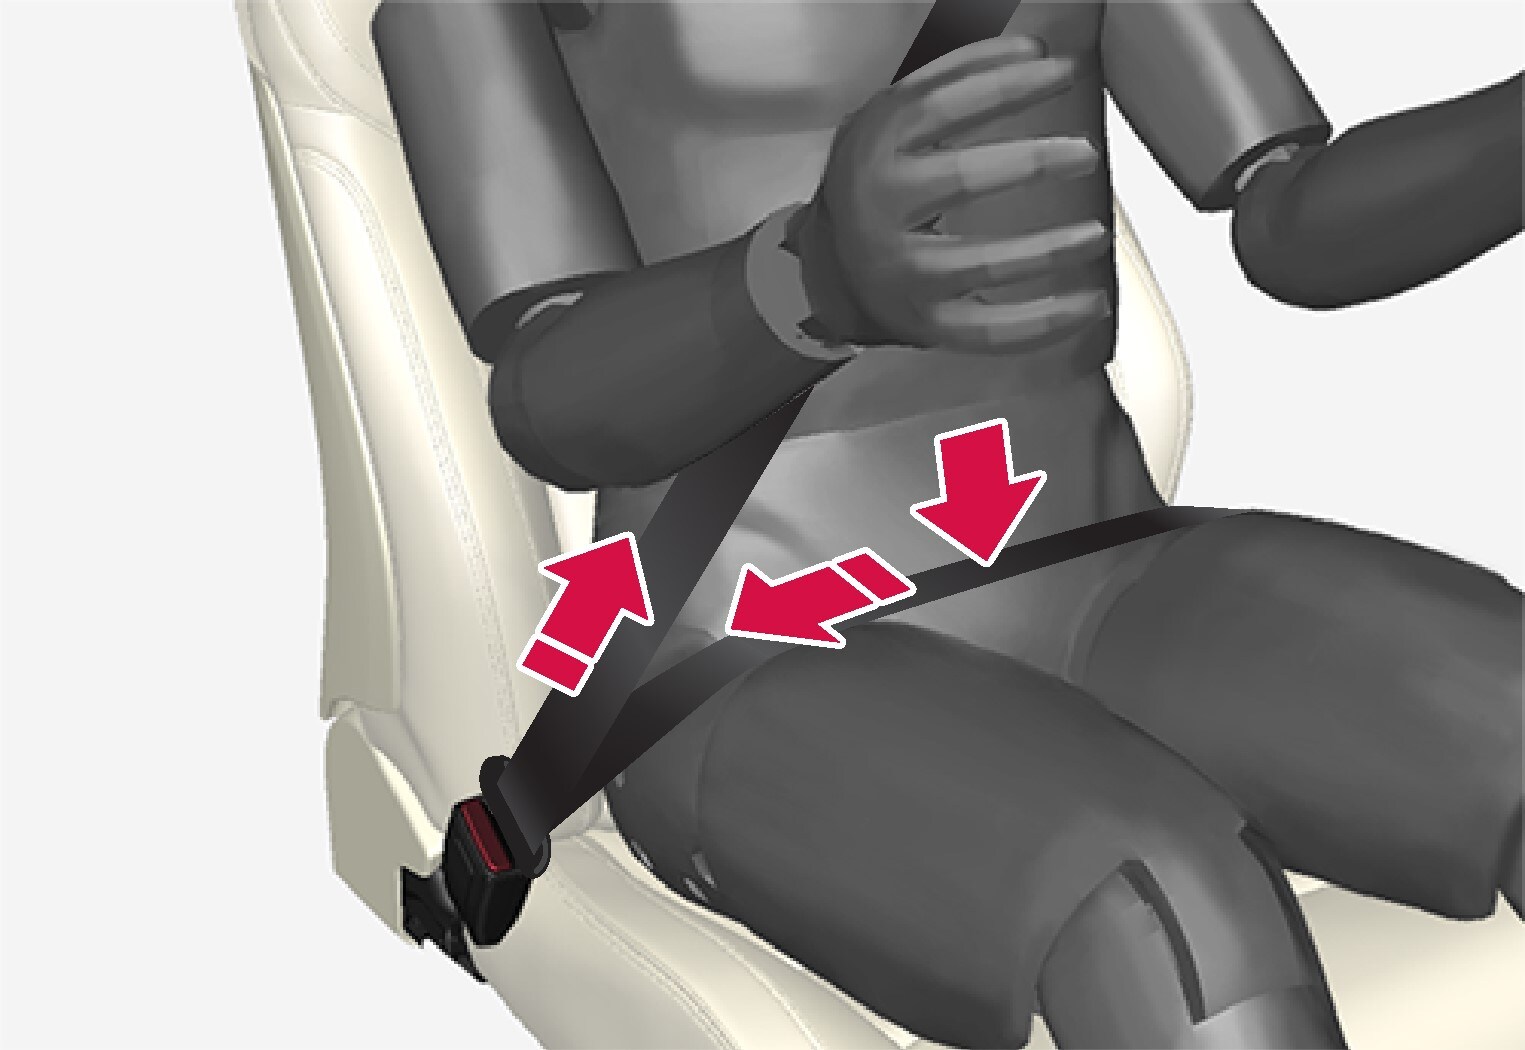 P5-1507–Safety–Seat belt over hips